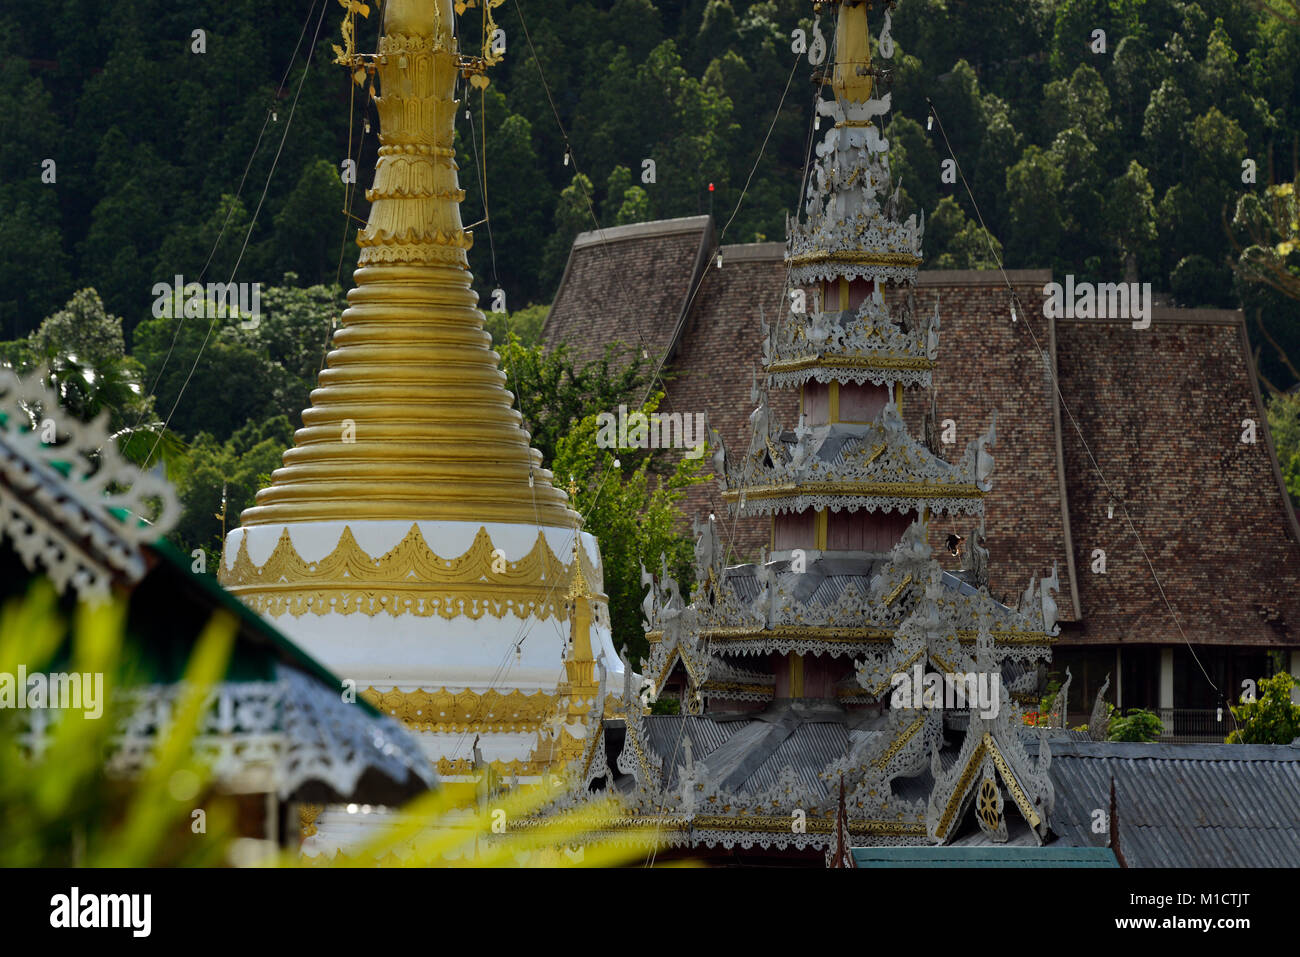 Der Tempel Wat Jong Kham und Jong Klang am See Nong Jong Kham im Dorf Mae Hong Son im norden von Thailand in Suedostasien. Stock Photo